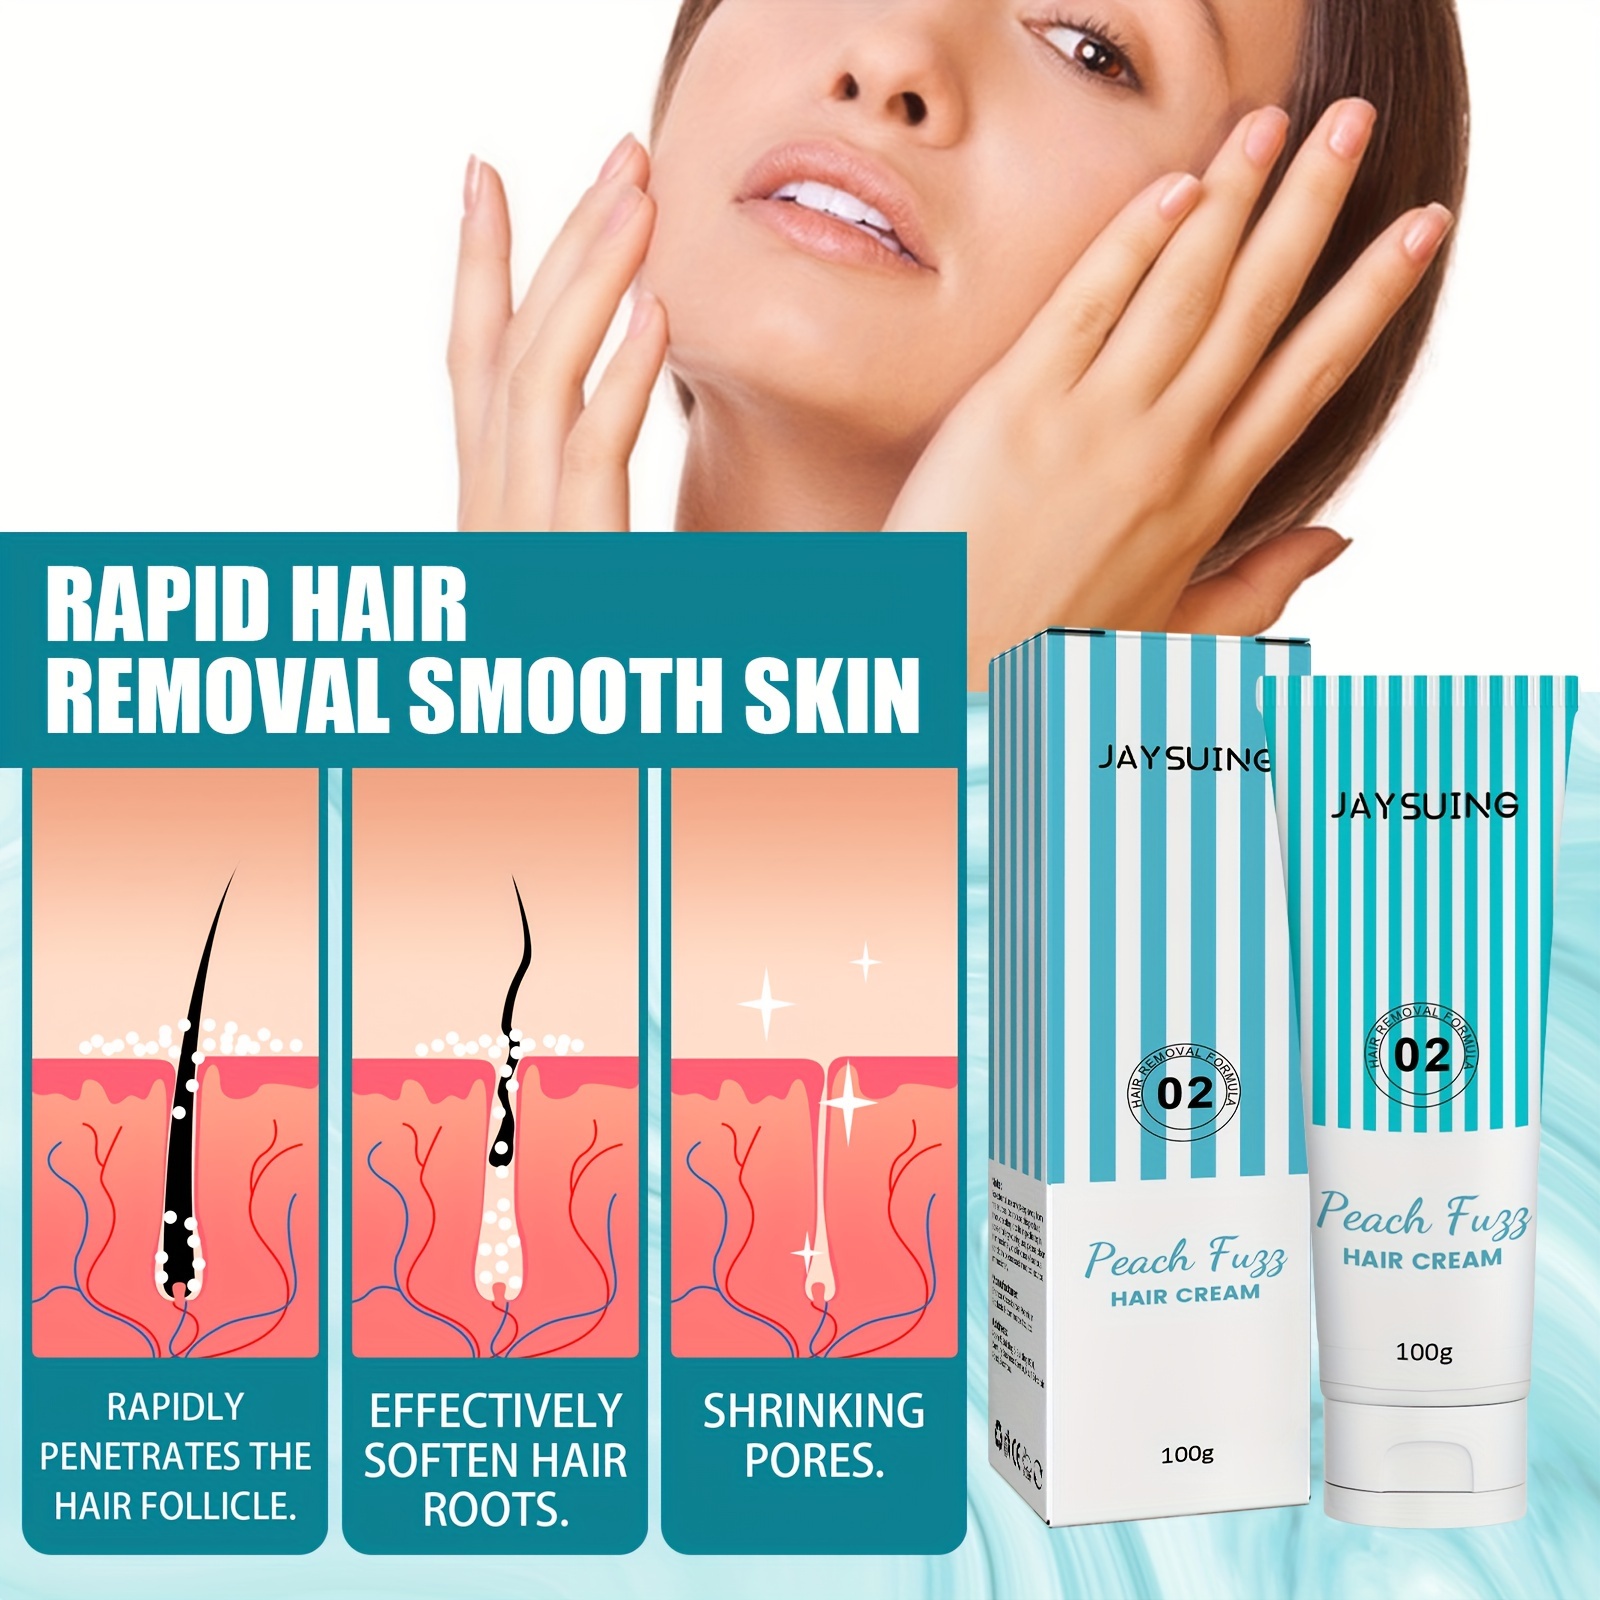 100g peach fuzz hair cream facial hair removal cream gentle soothing hair removal for women